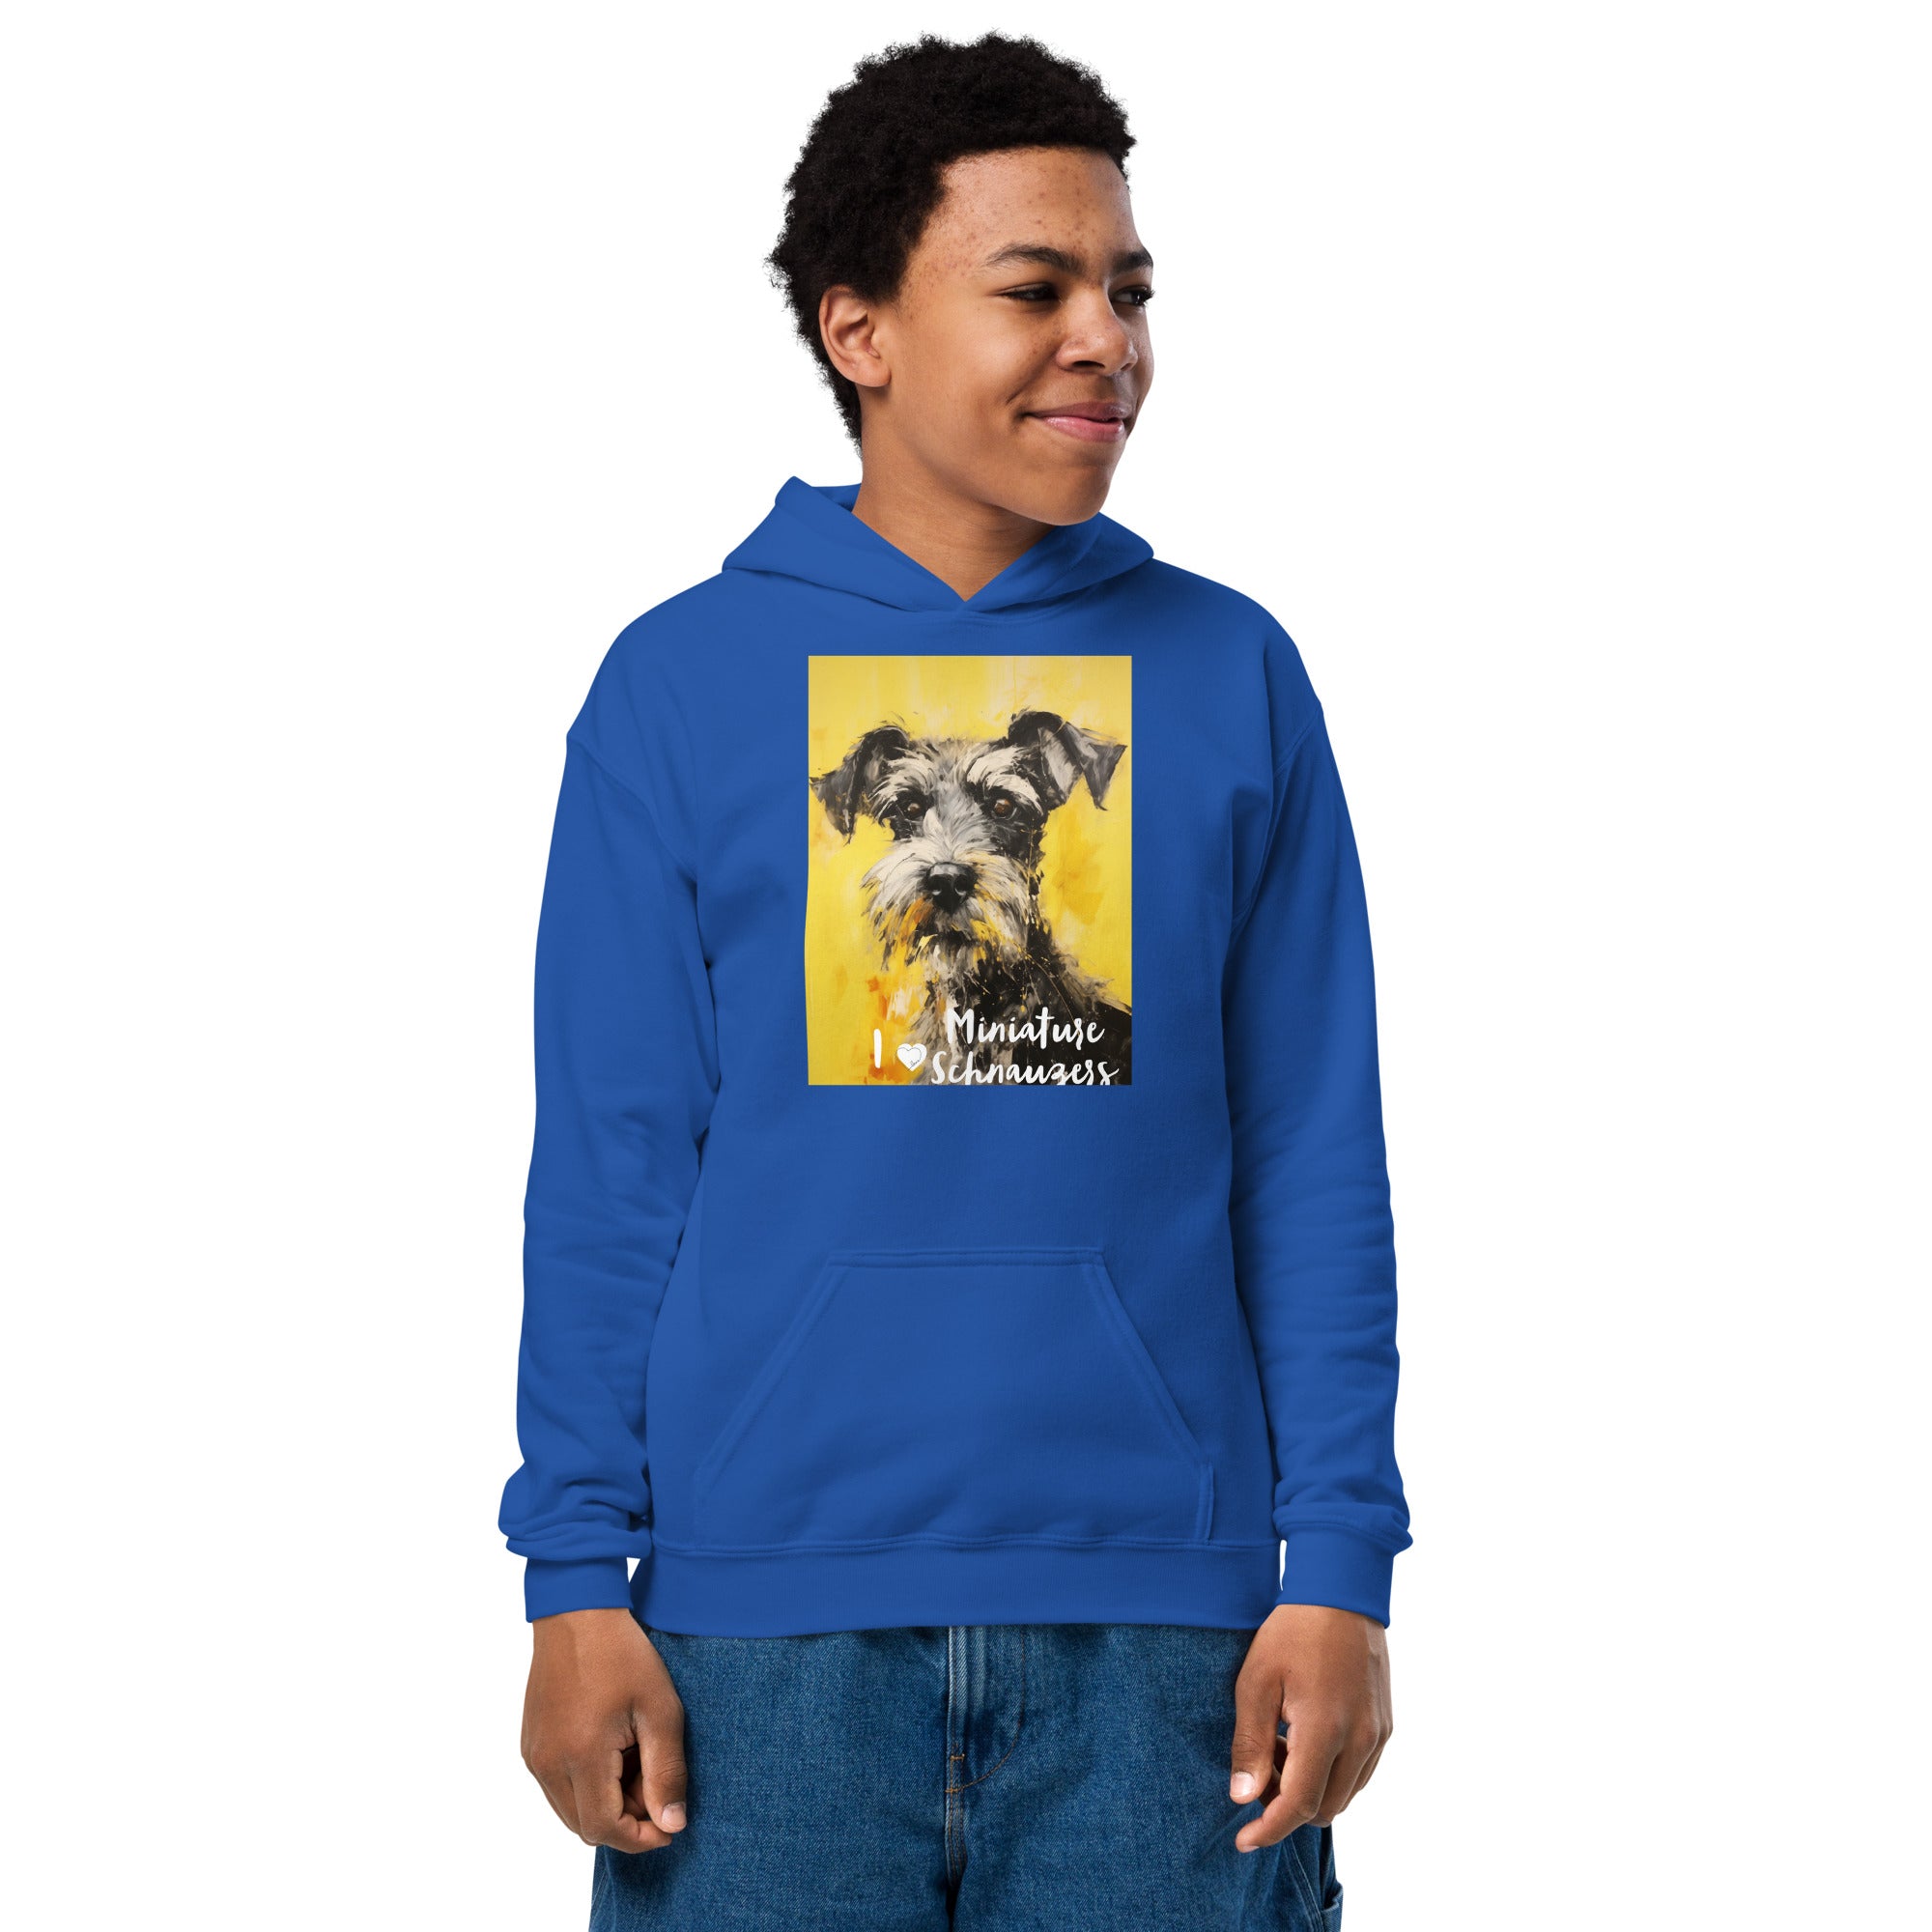 Youth heavy blend hoodie - I ❤ Dogs - Miniature Schnauzer